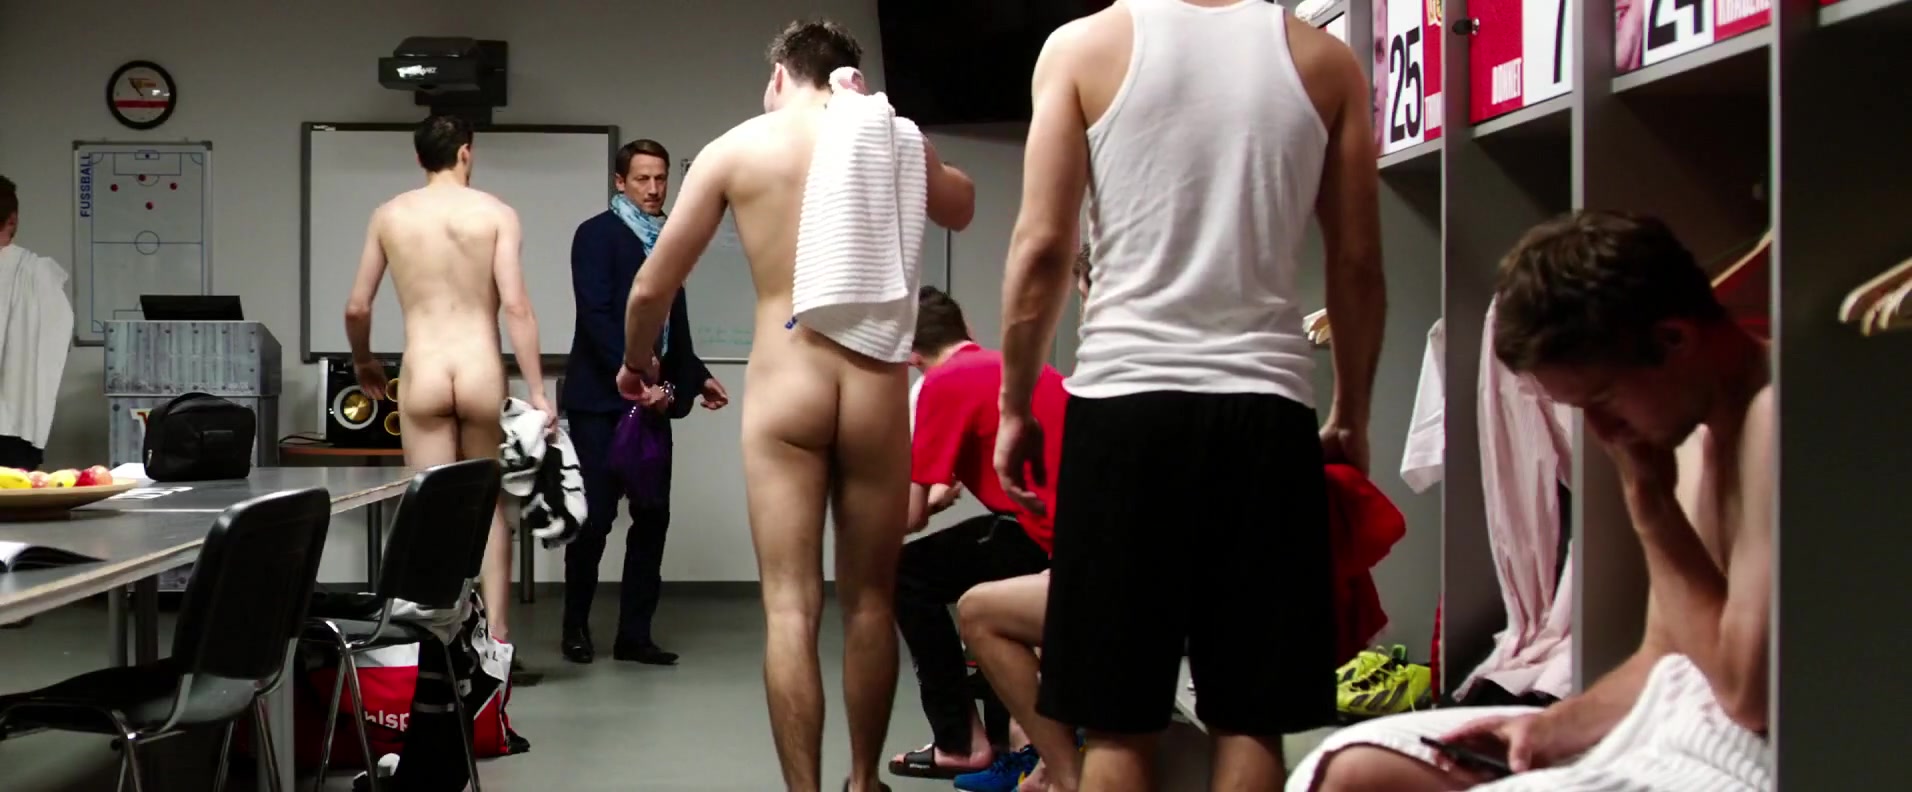 Nude guys in football locker - Hot movie scene